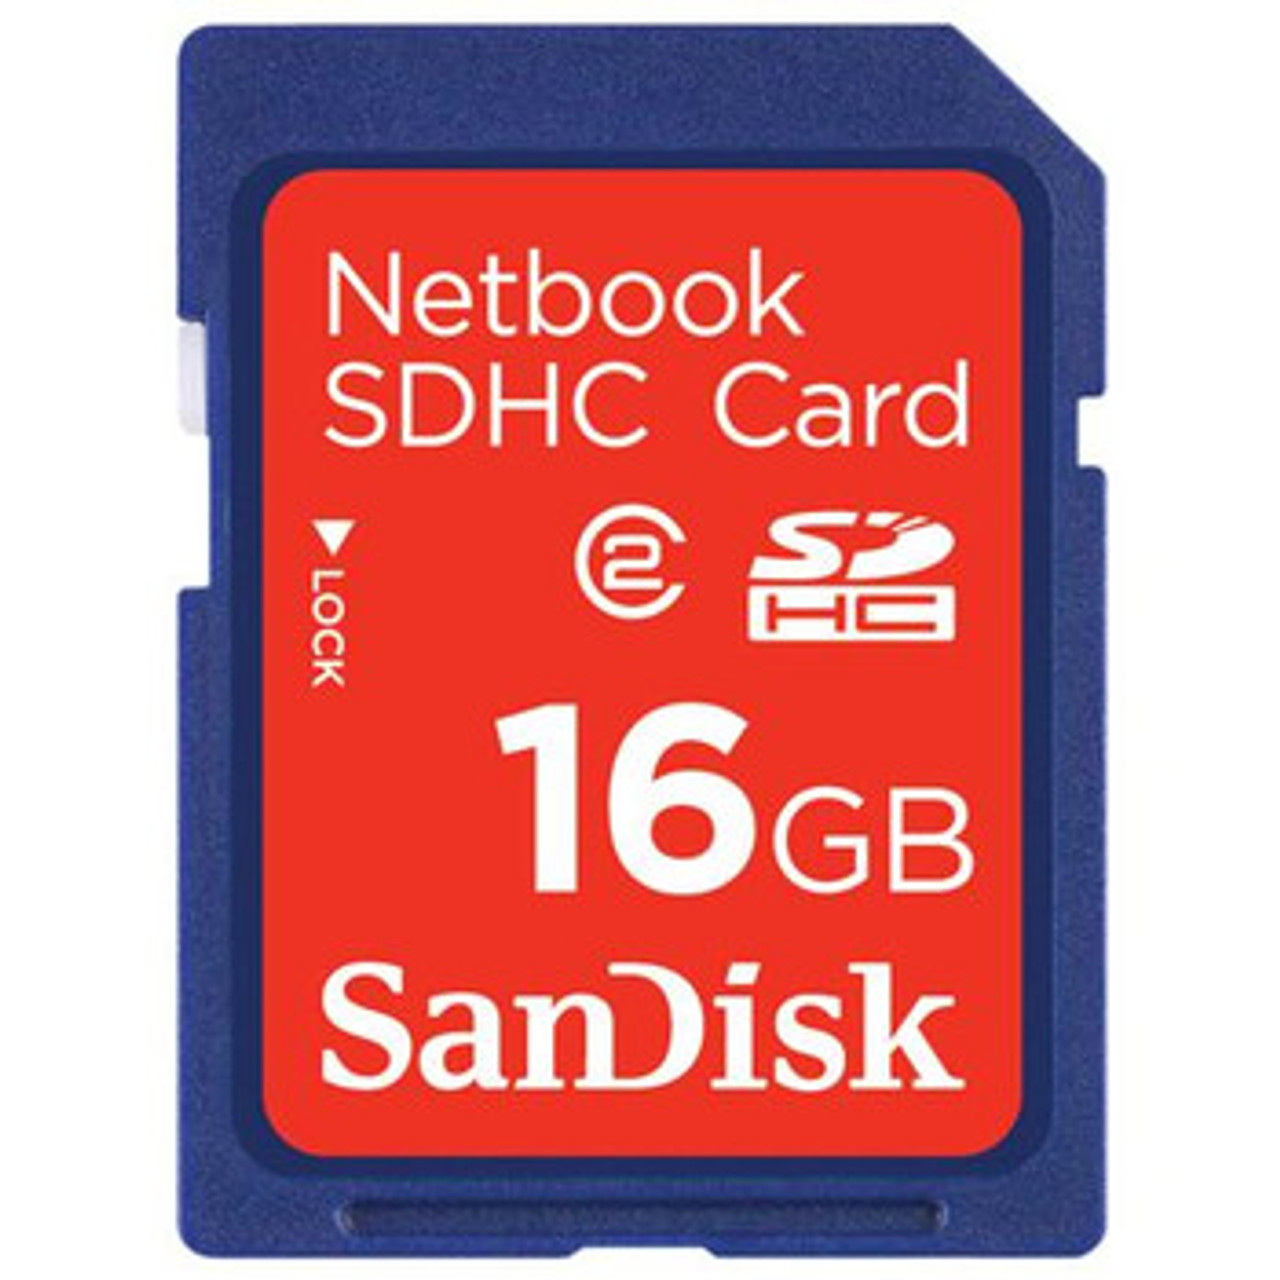 SDSDNT-016G-A11 | Sandisk | Netbook 16Gb Class 2 Sdhc Flash Memory Card